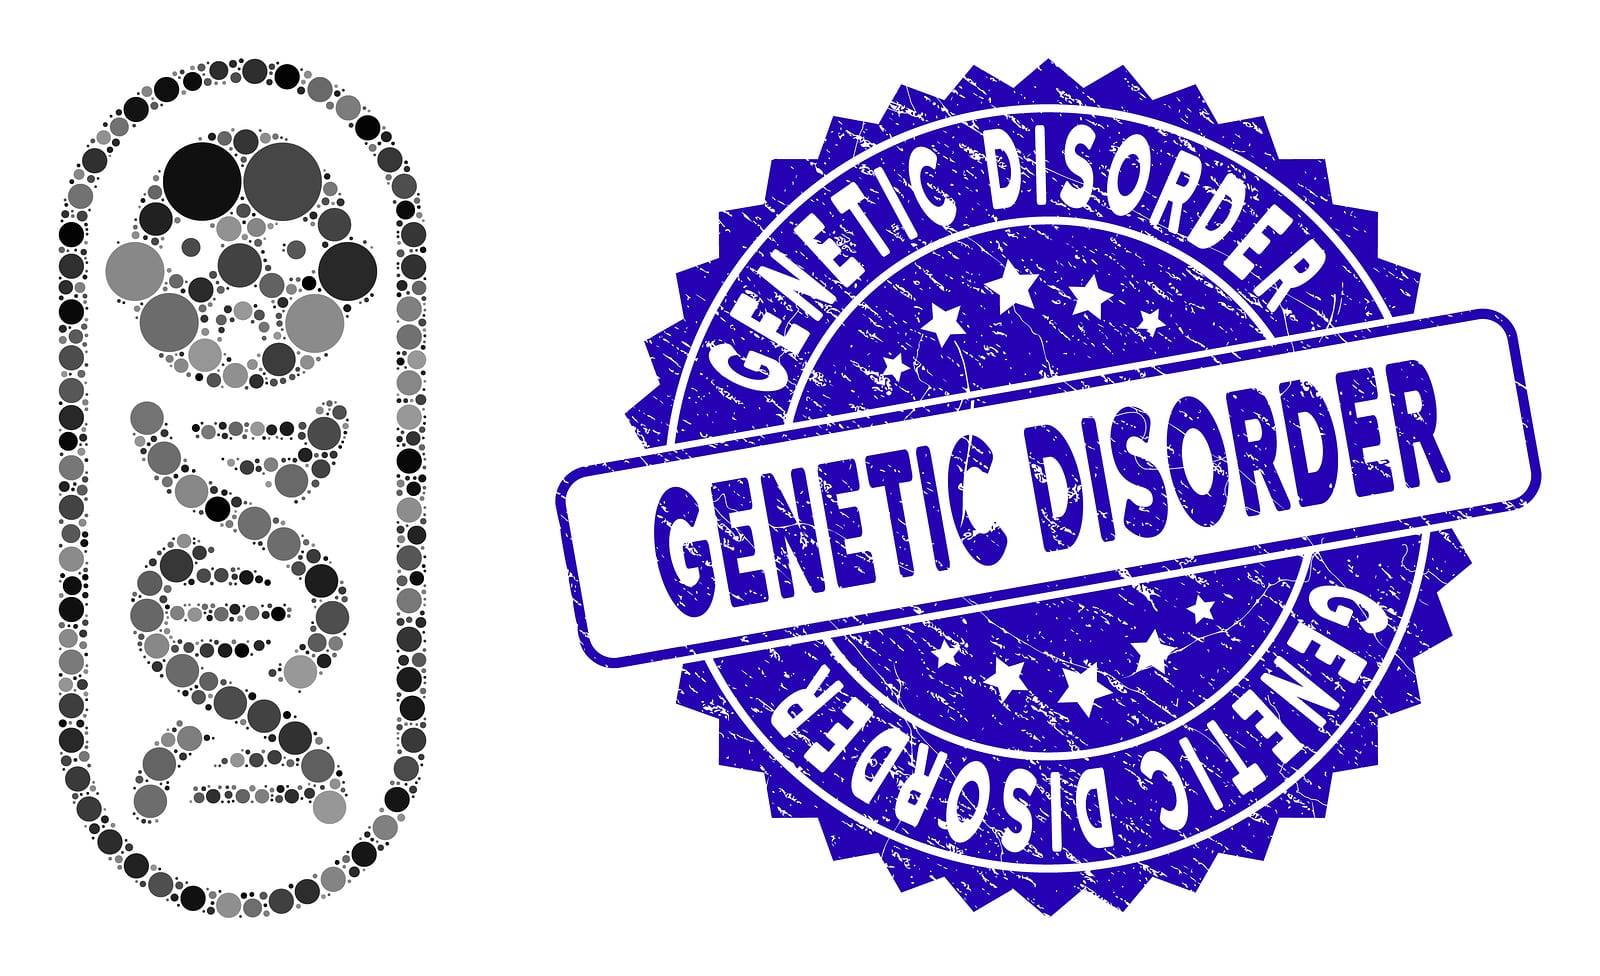 Genetic Disorder stamp